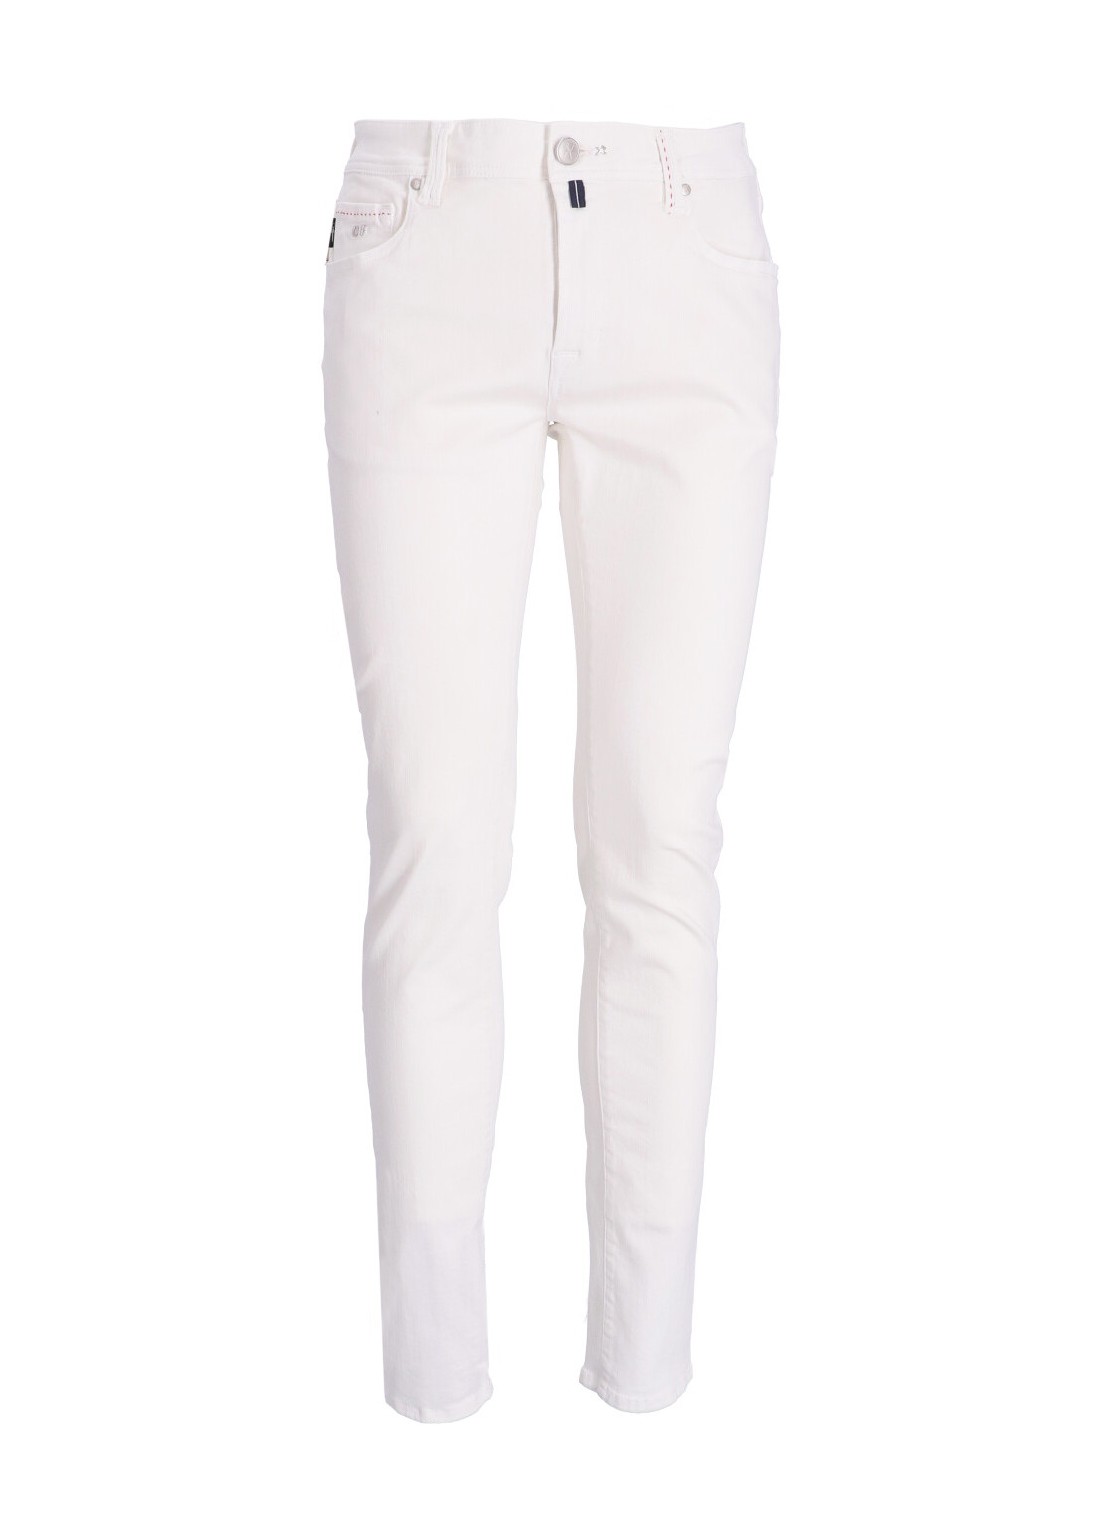 Pantalon jeans tramarossa denim man leonardo zip stre leonardo zip stre old 0001 white talla 32
 